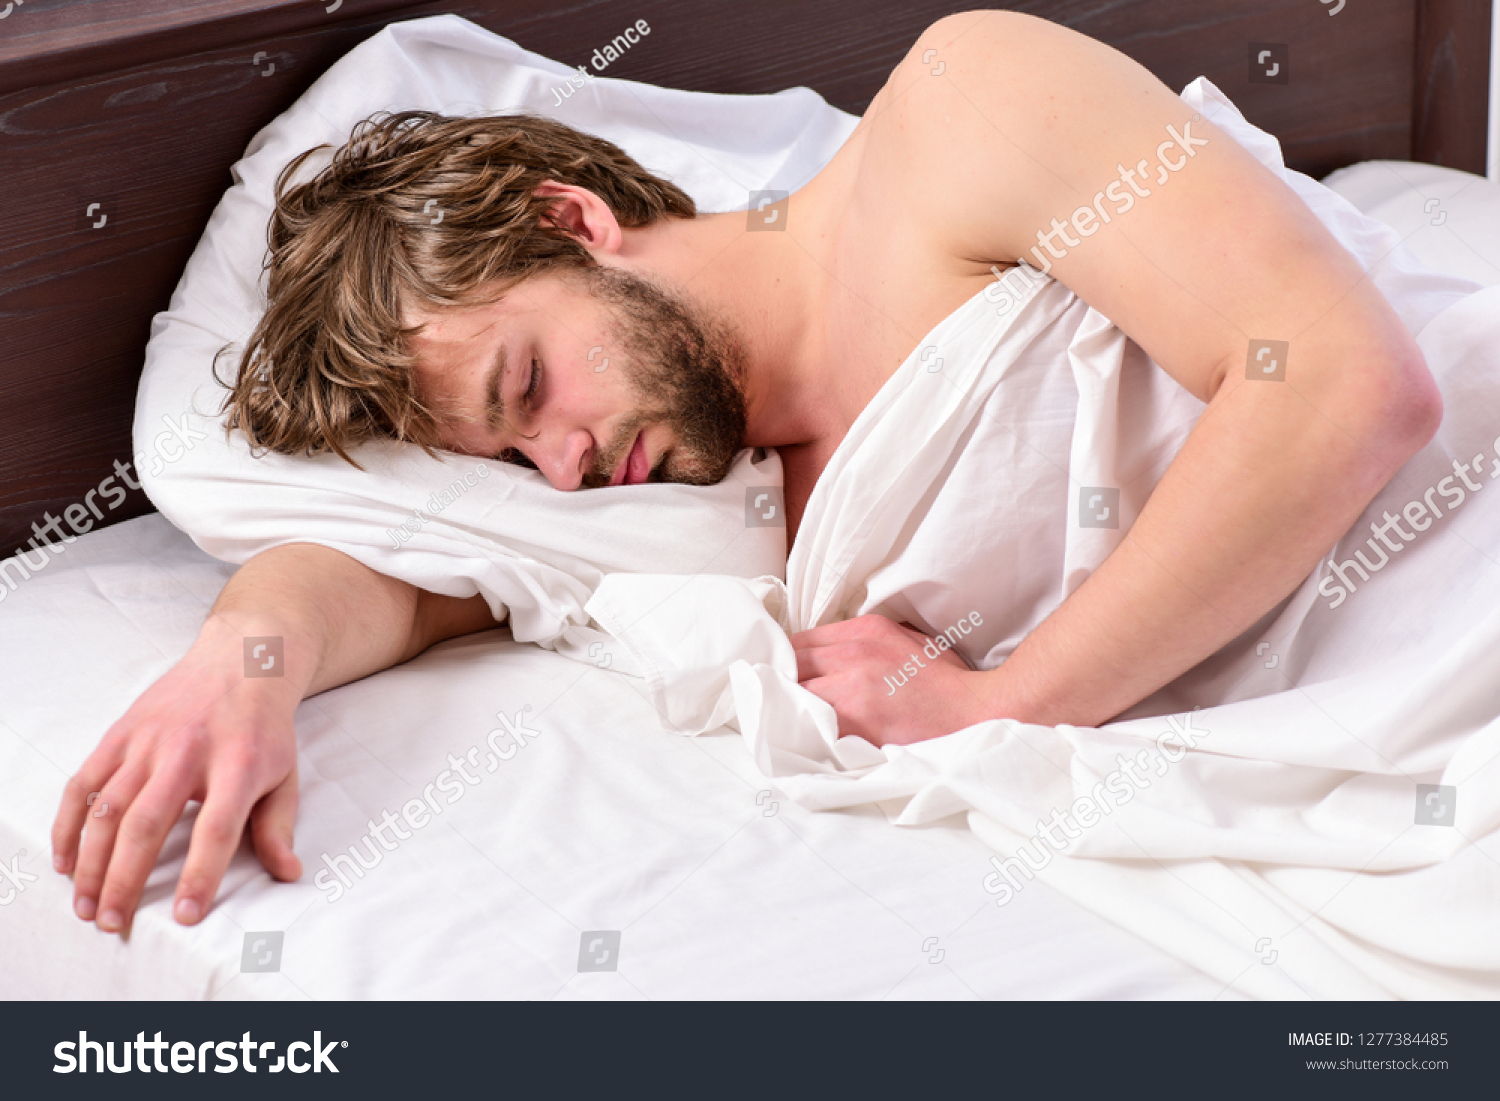 Лежачий человек на кровати